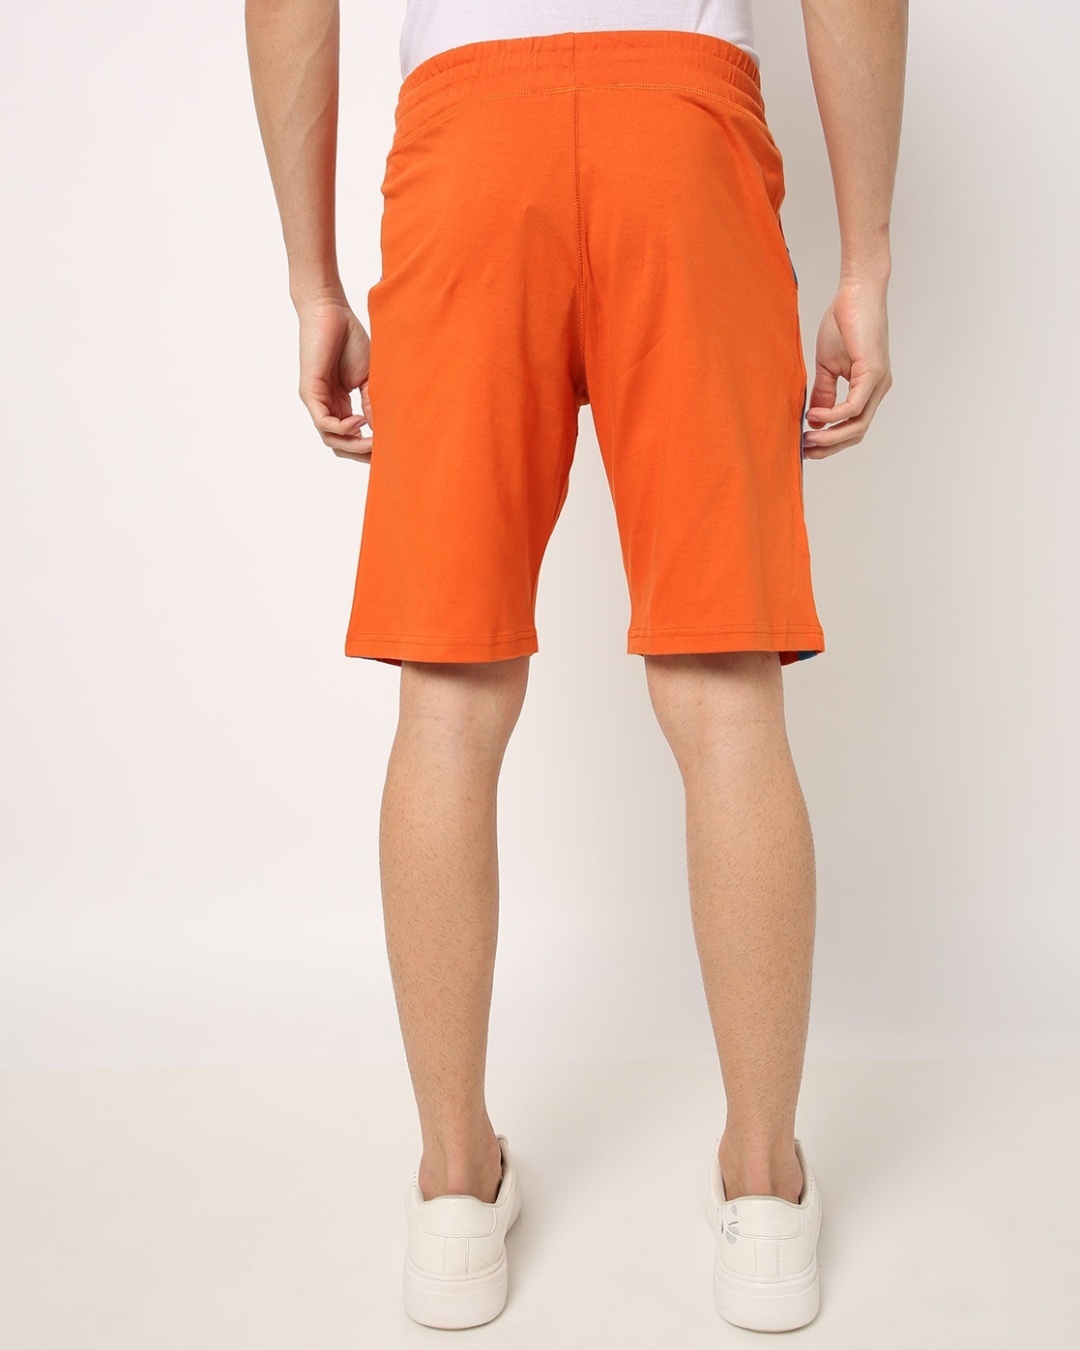 Men S Orange Color Block Shorts 512119 1655877424 3 